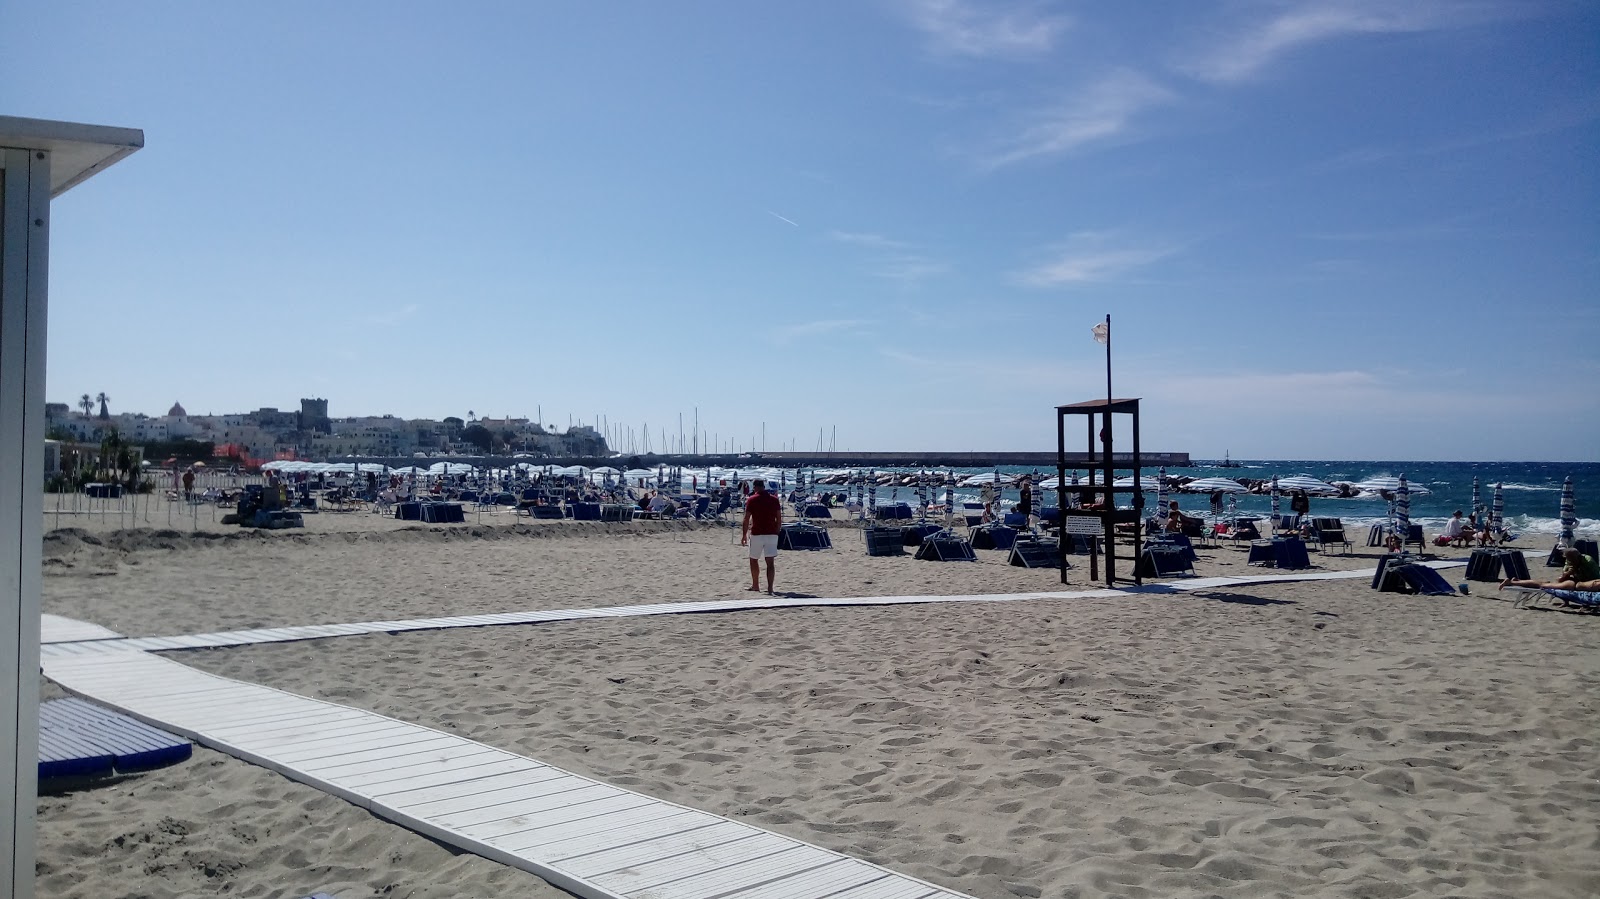 Photo of Spiaggia della Chiaia backed by cliffs